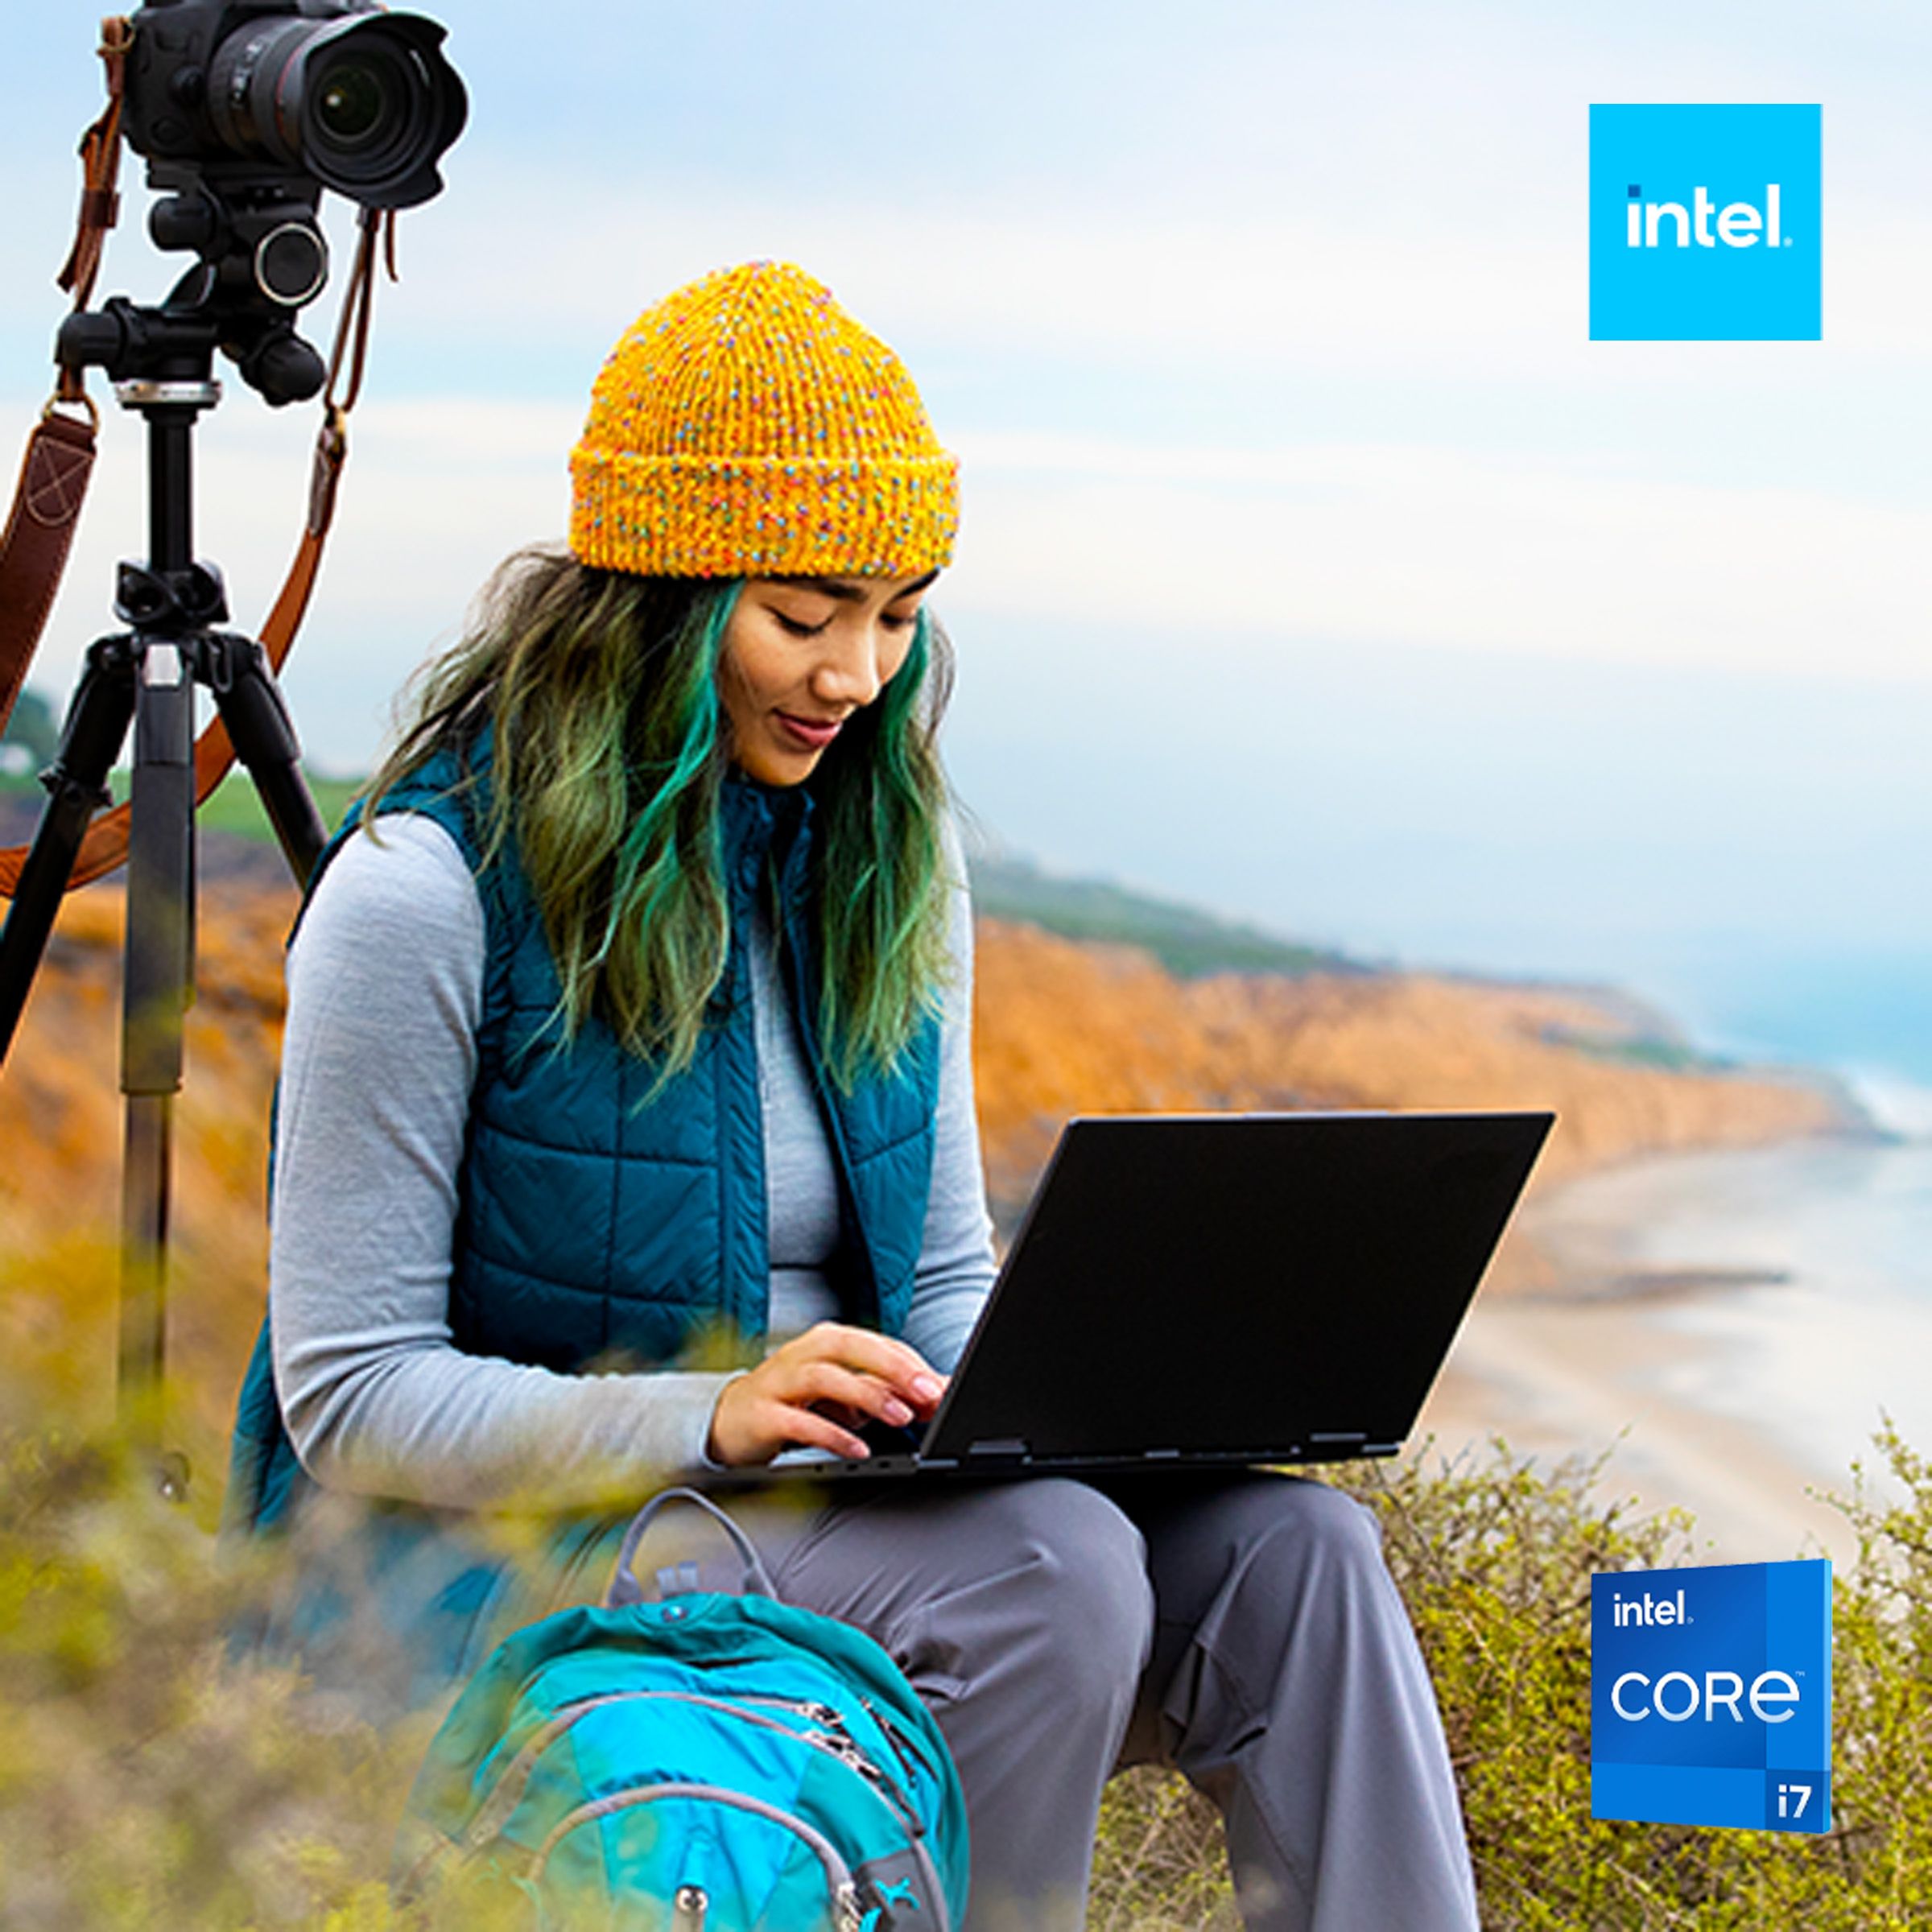 Woman sitting on coastal hillside next to camera in tripod with Intel Core laptop